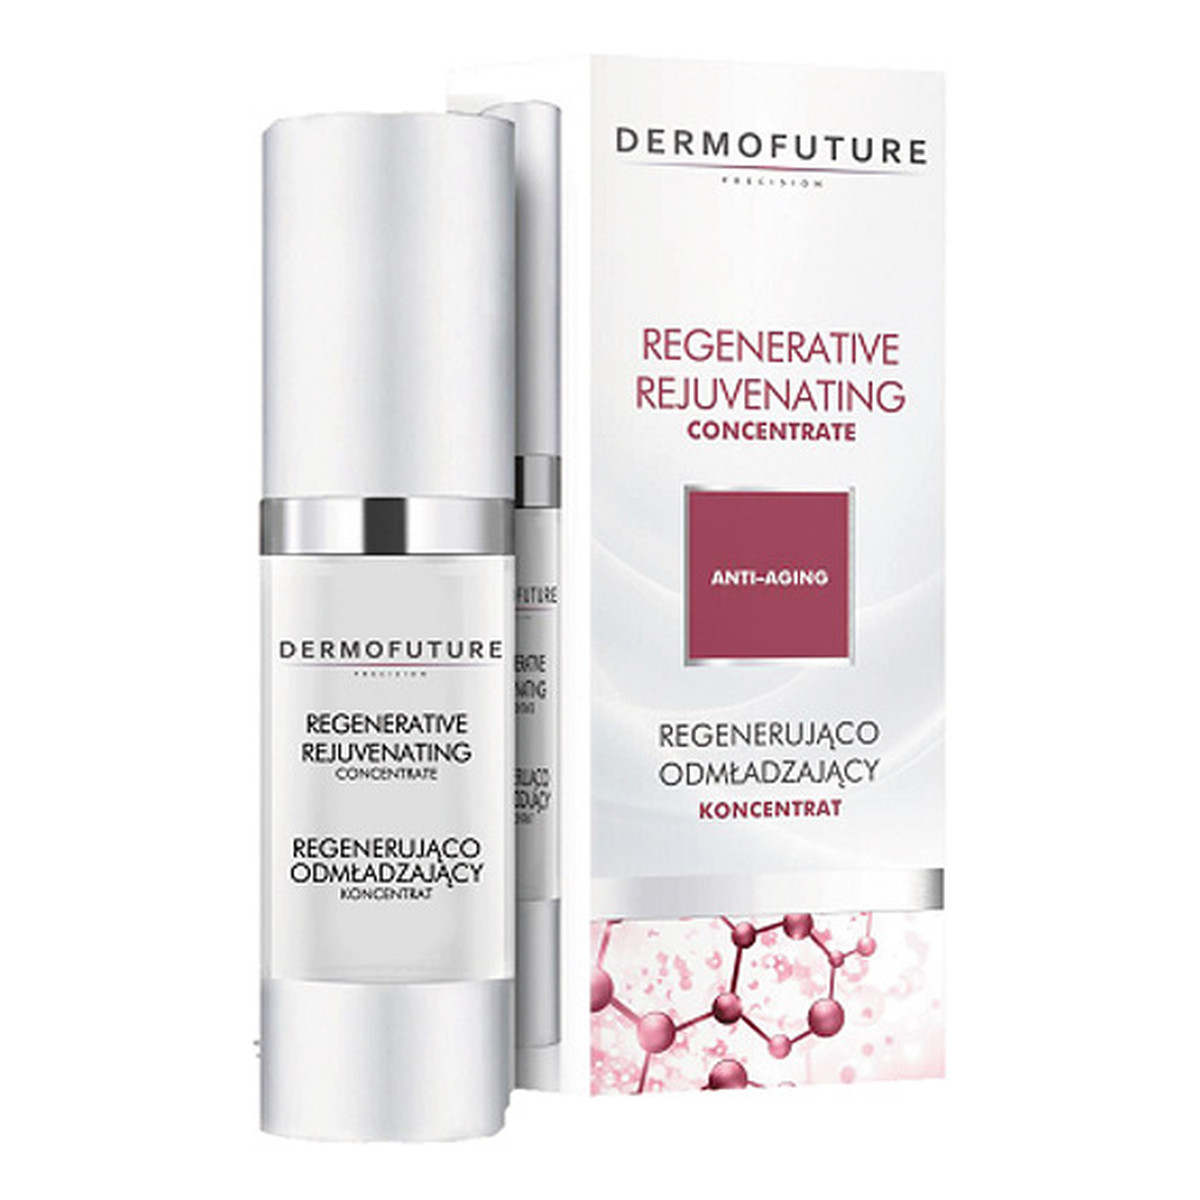 DermoFuture Precision Regenerative Rejuvenating koncentrat regeneracyjno-odmładzający Anti-Aging 30ml